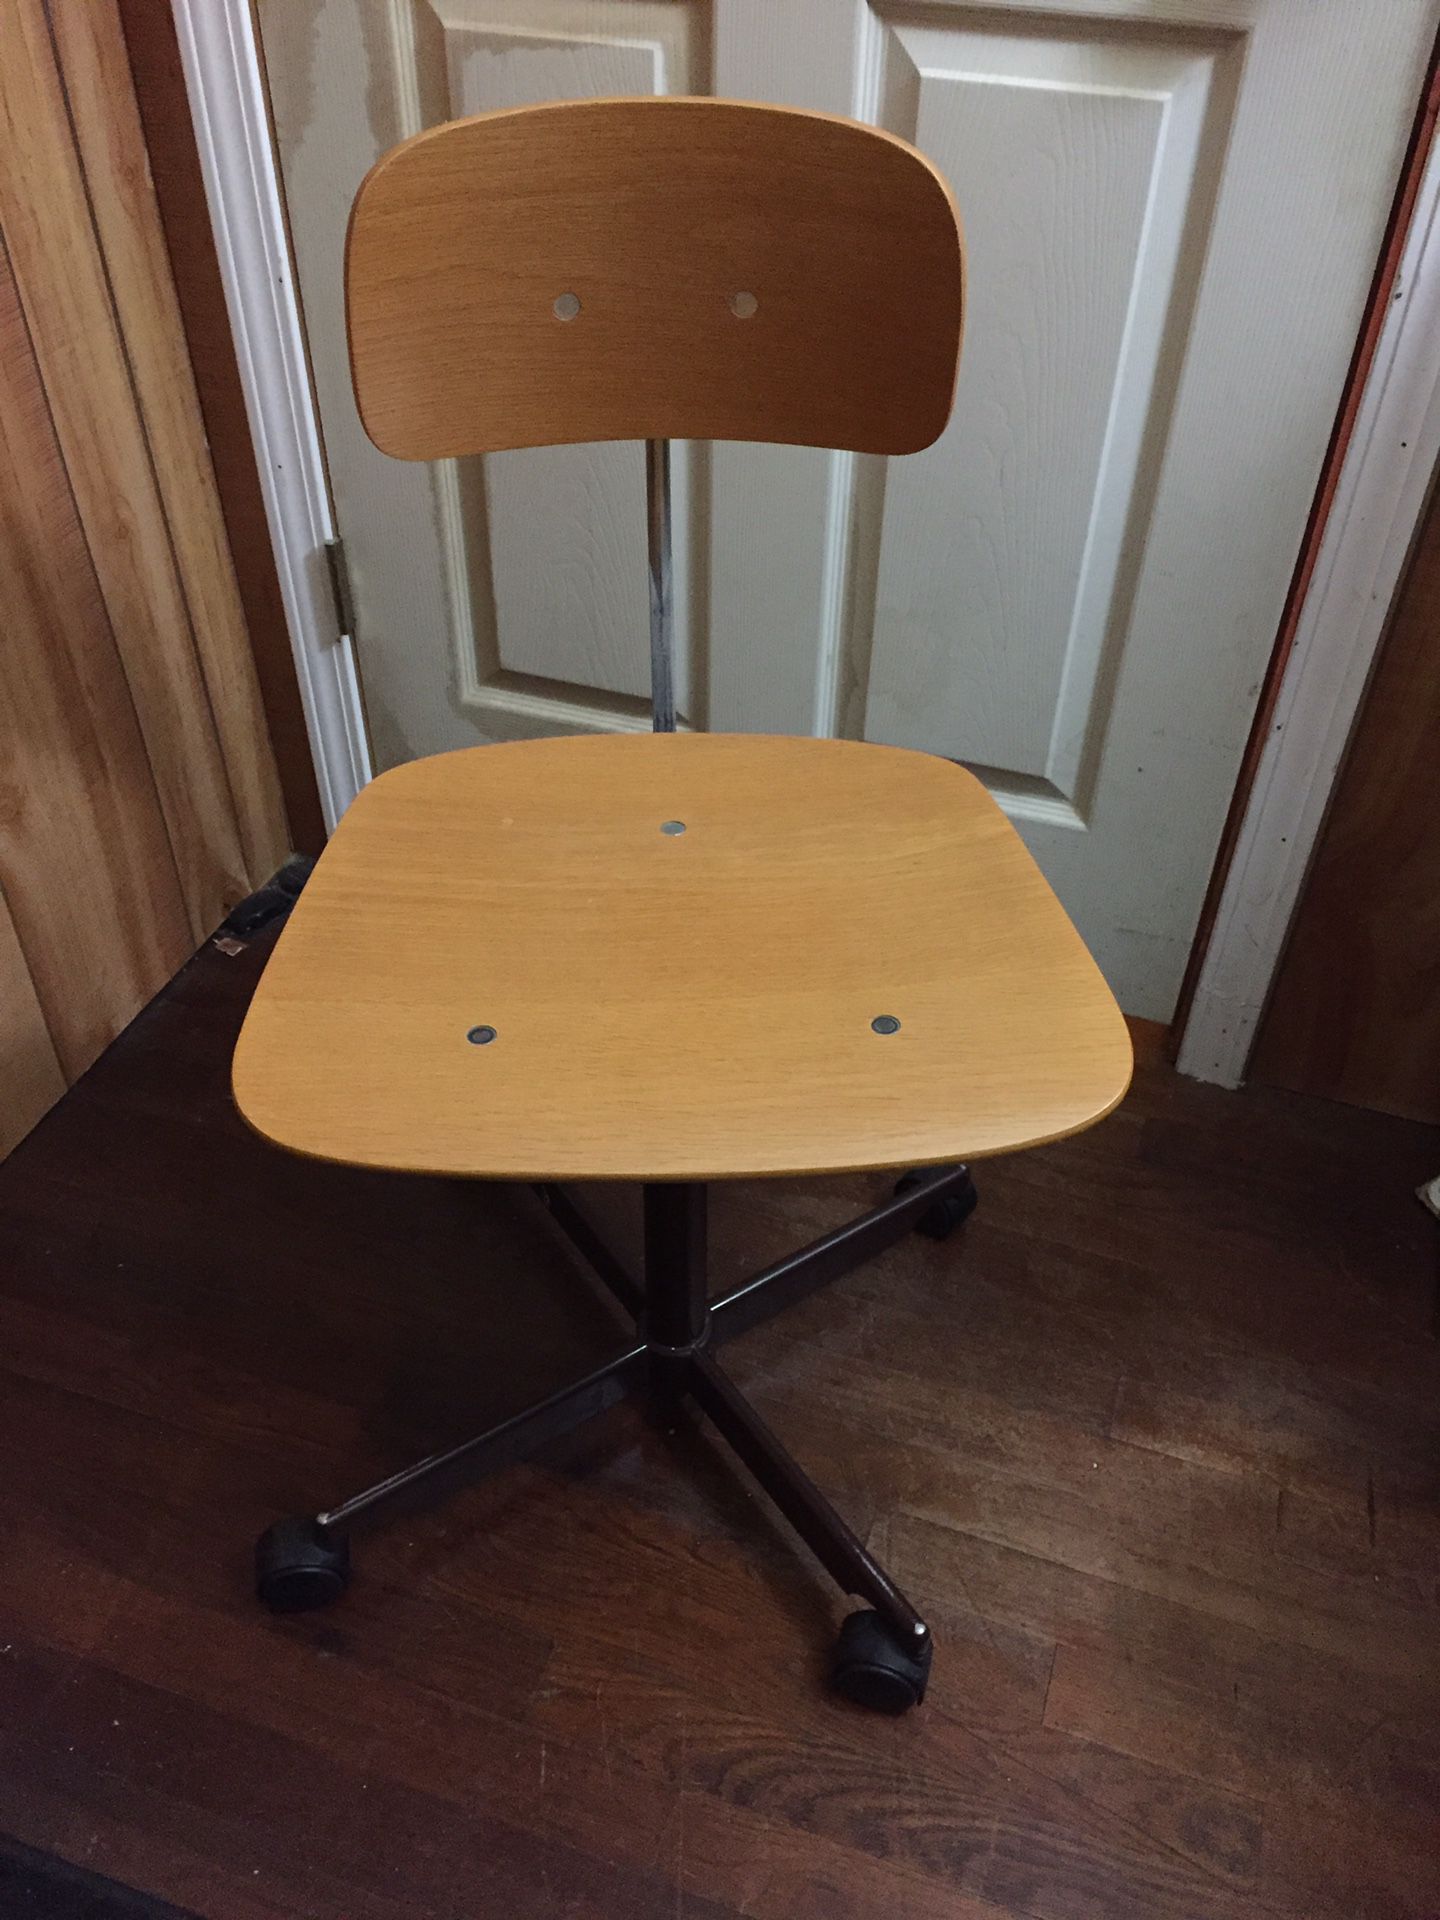 KEVI mid century desk chair